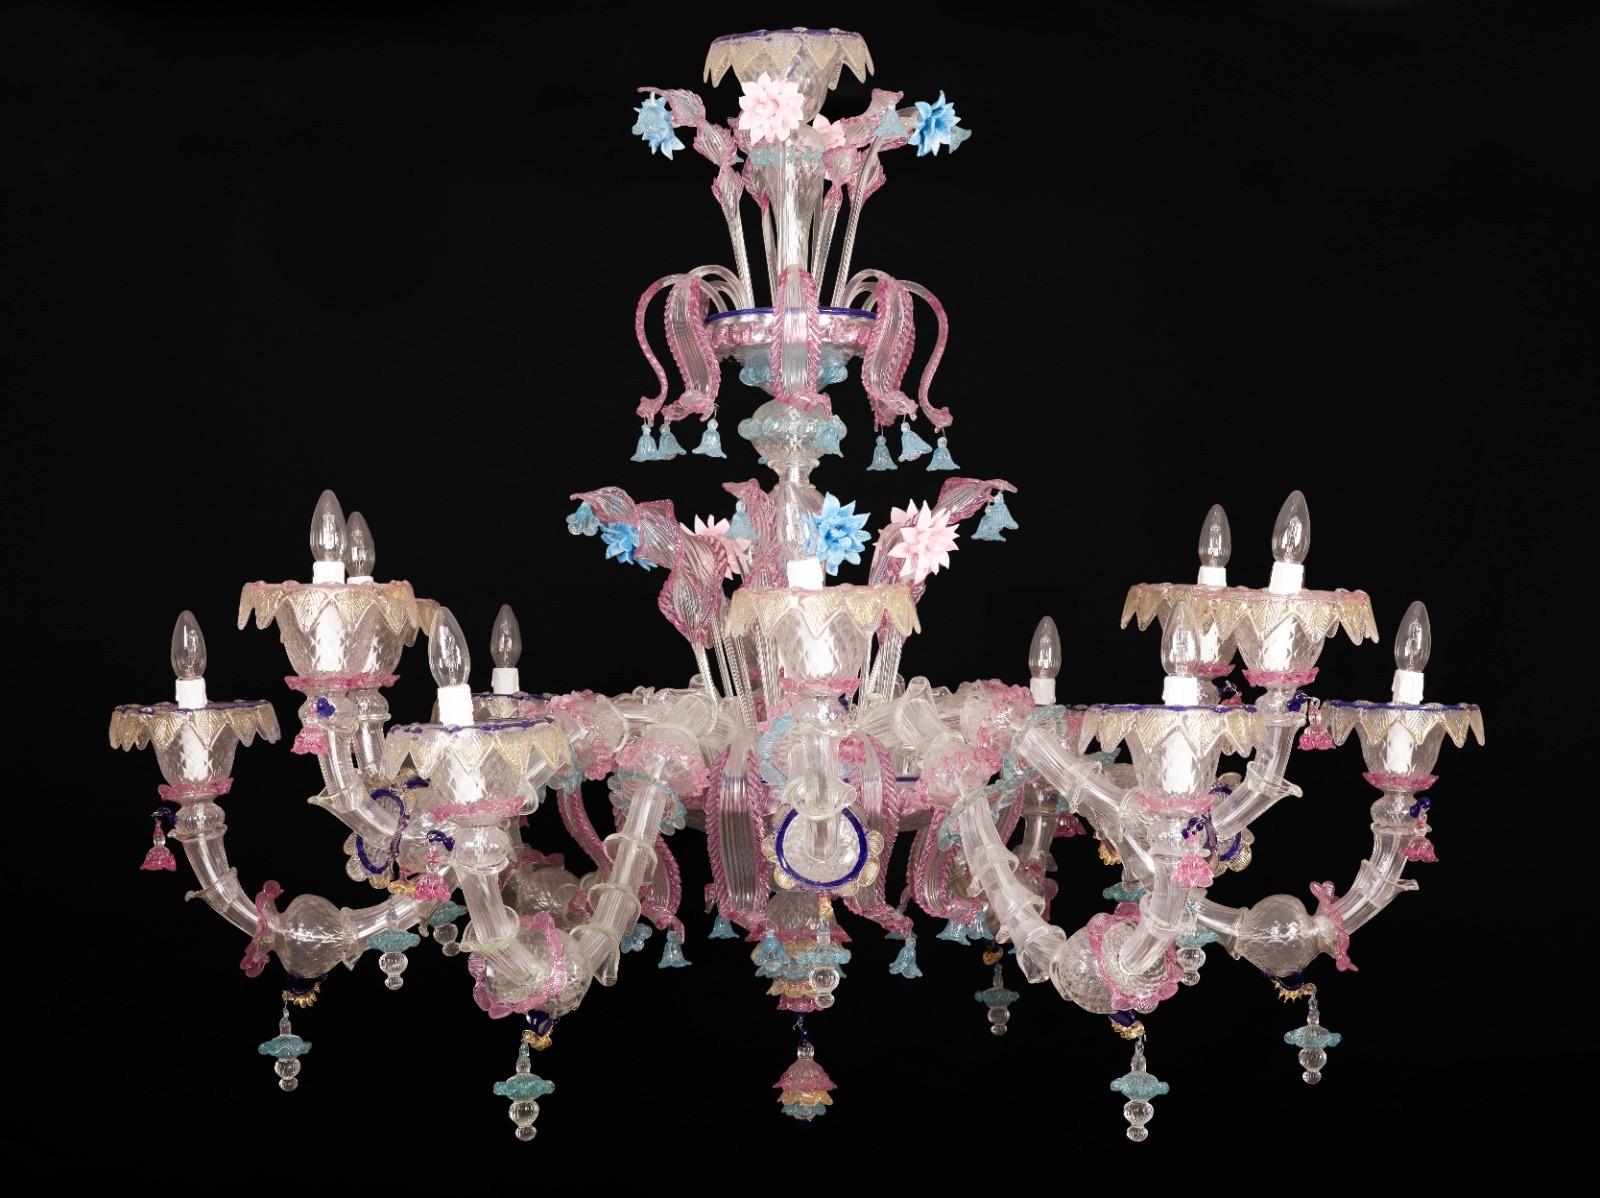 heavenly chandeliers